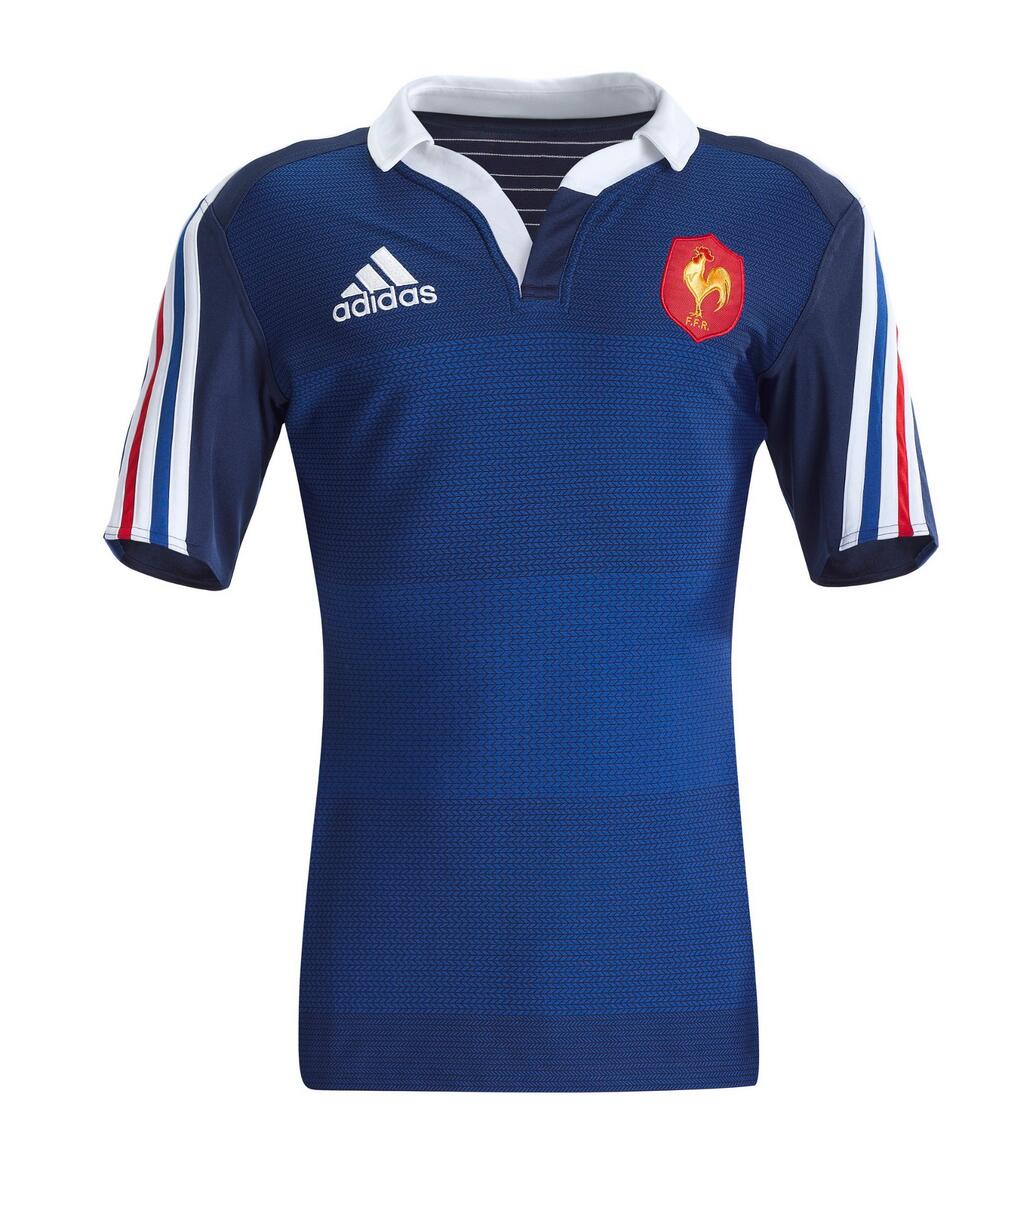 adidas maillot XV de France 2013 blacks